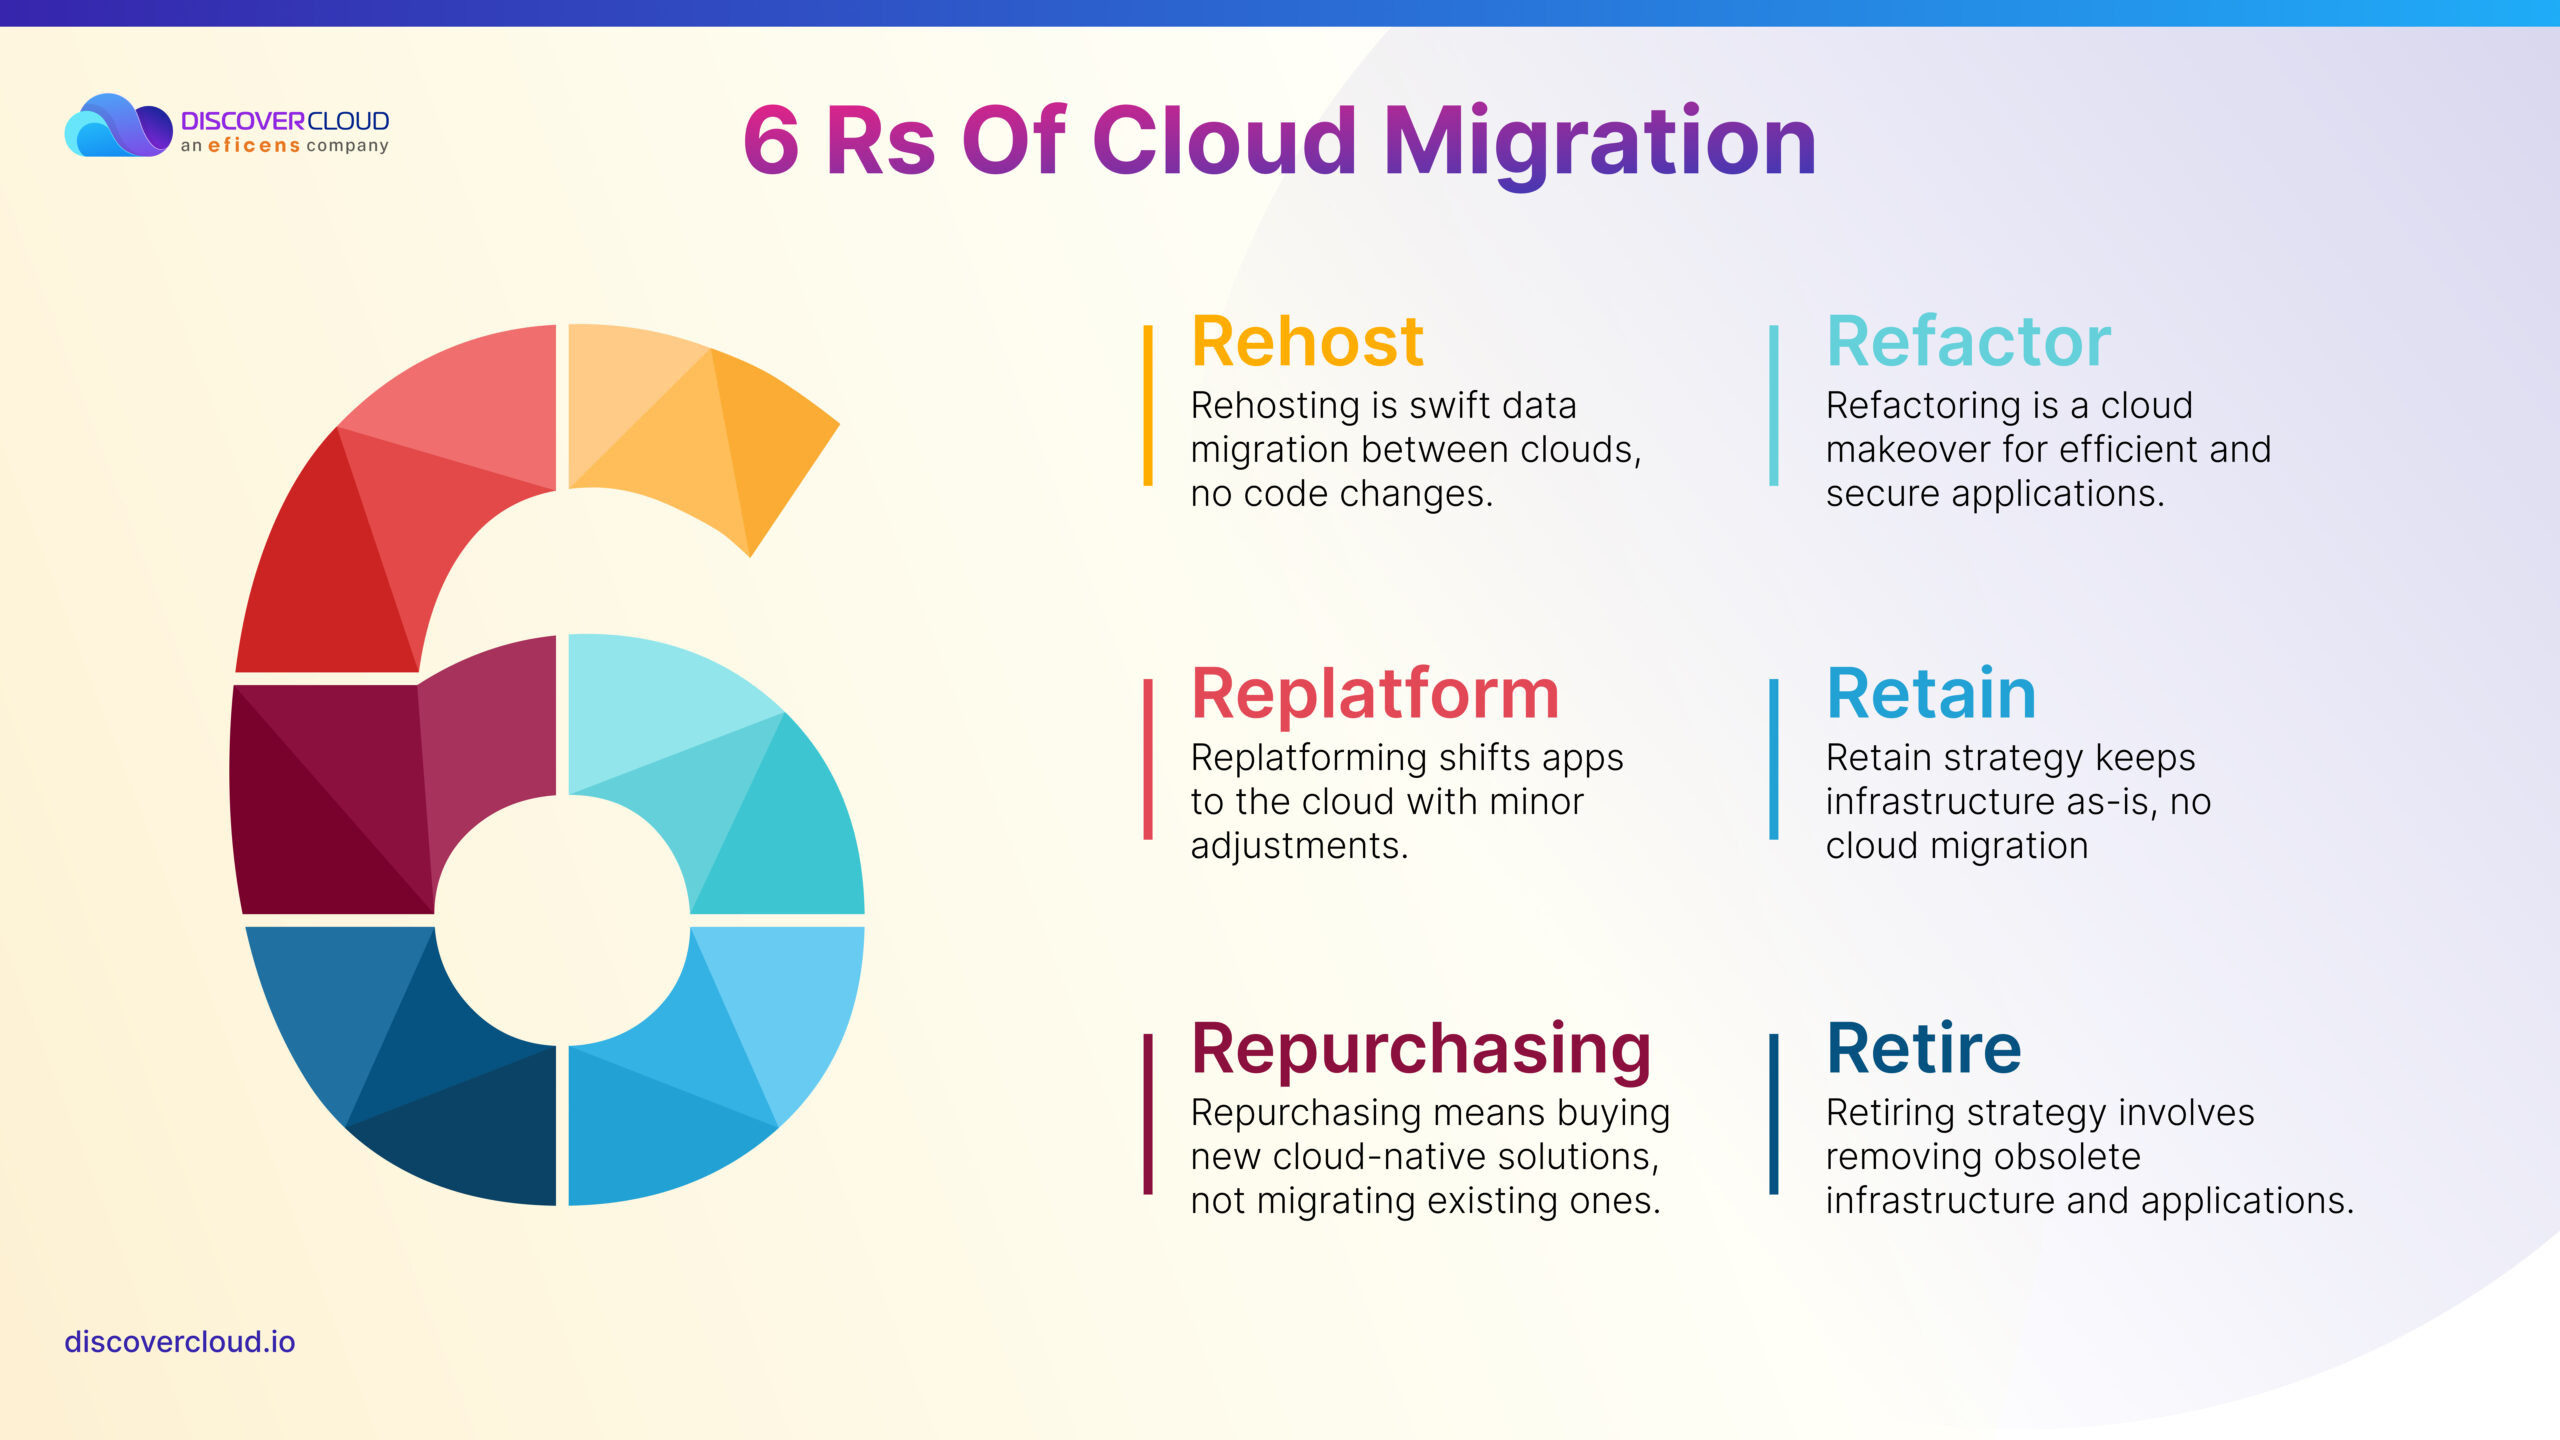 6 Rs of Cloud Migration